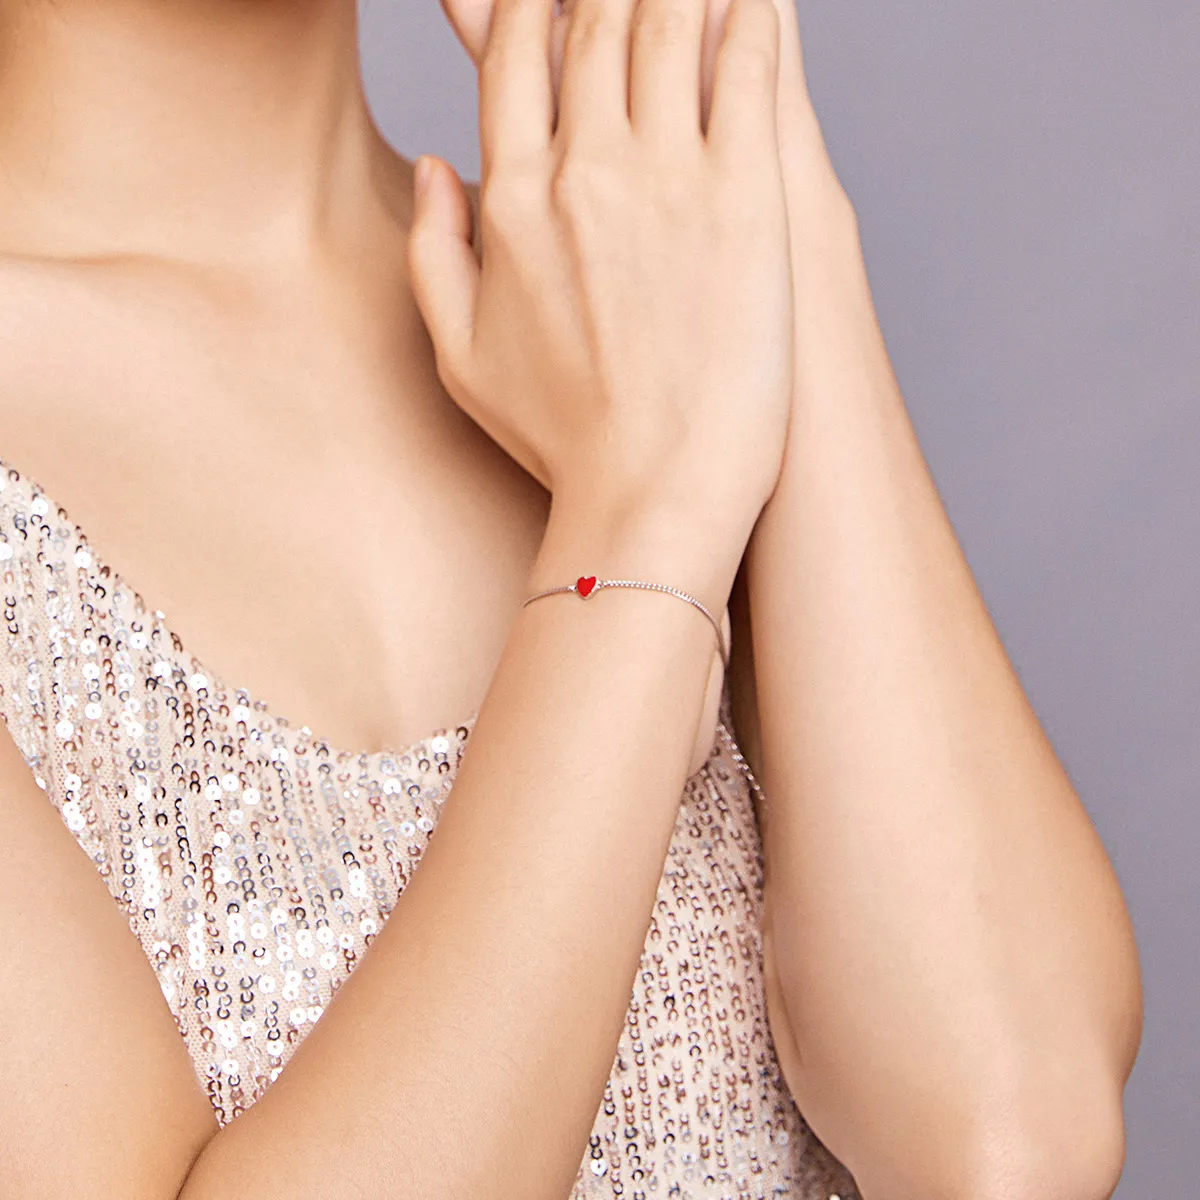 Pandora Style Silver Heart bracelet - SCB182